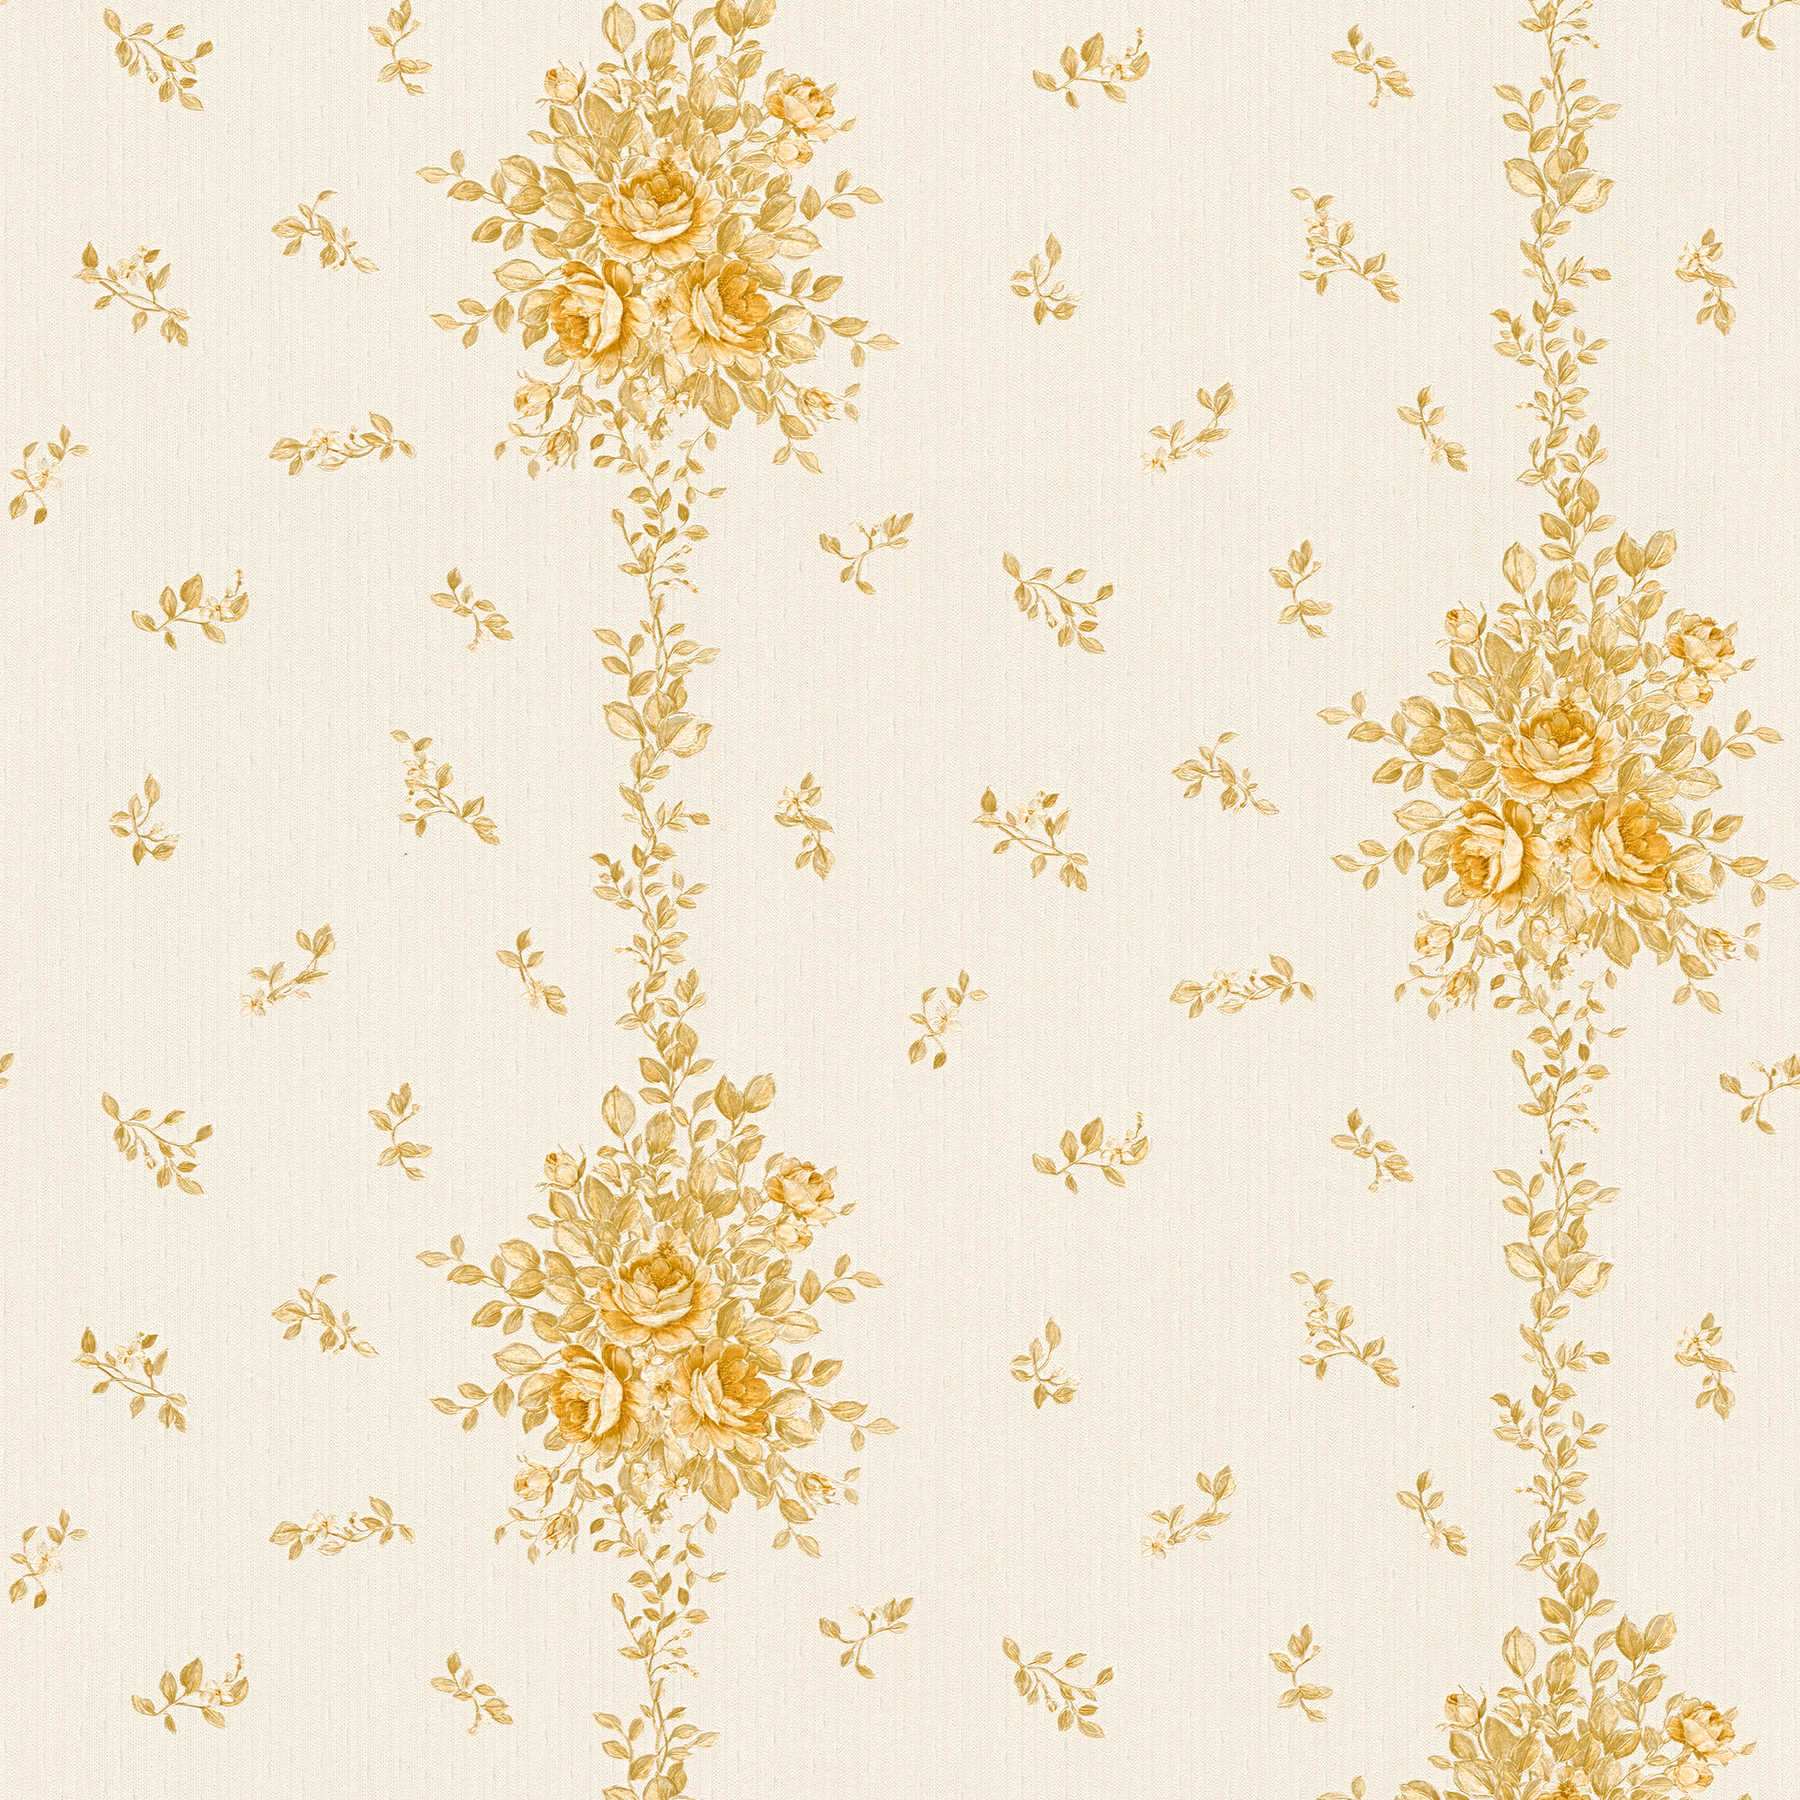         Floral wallpaper floral pattern in metallic gold - cream
    